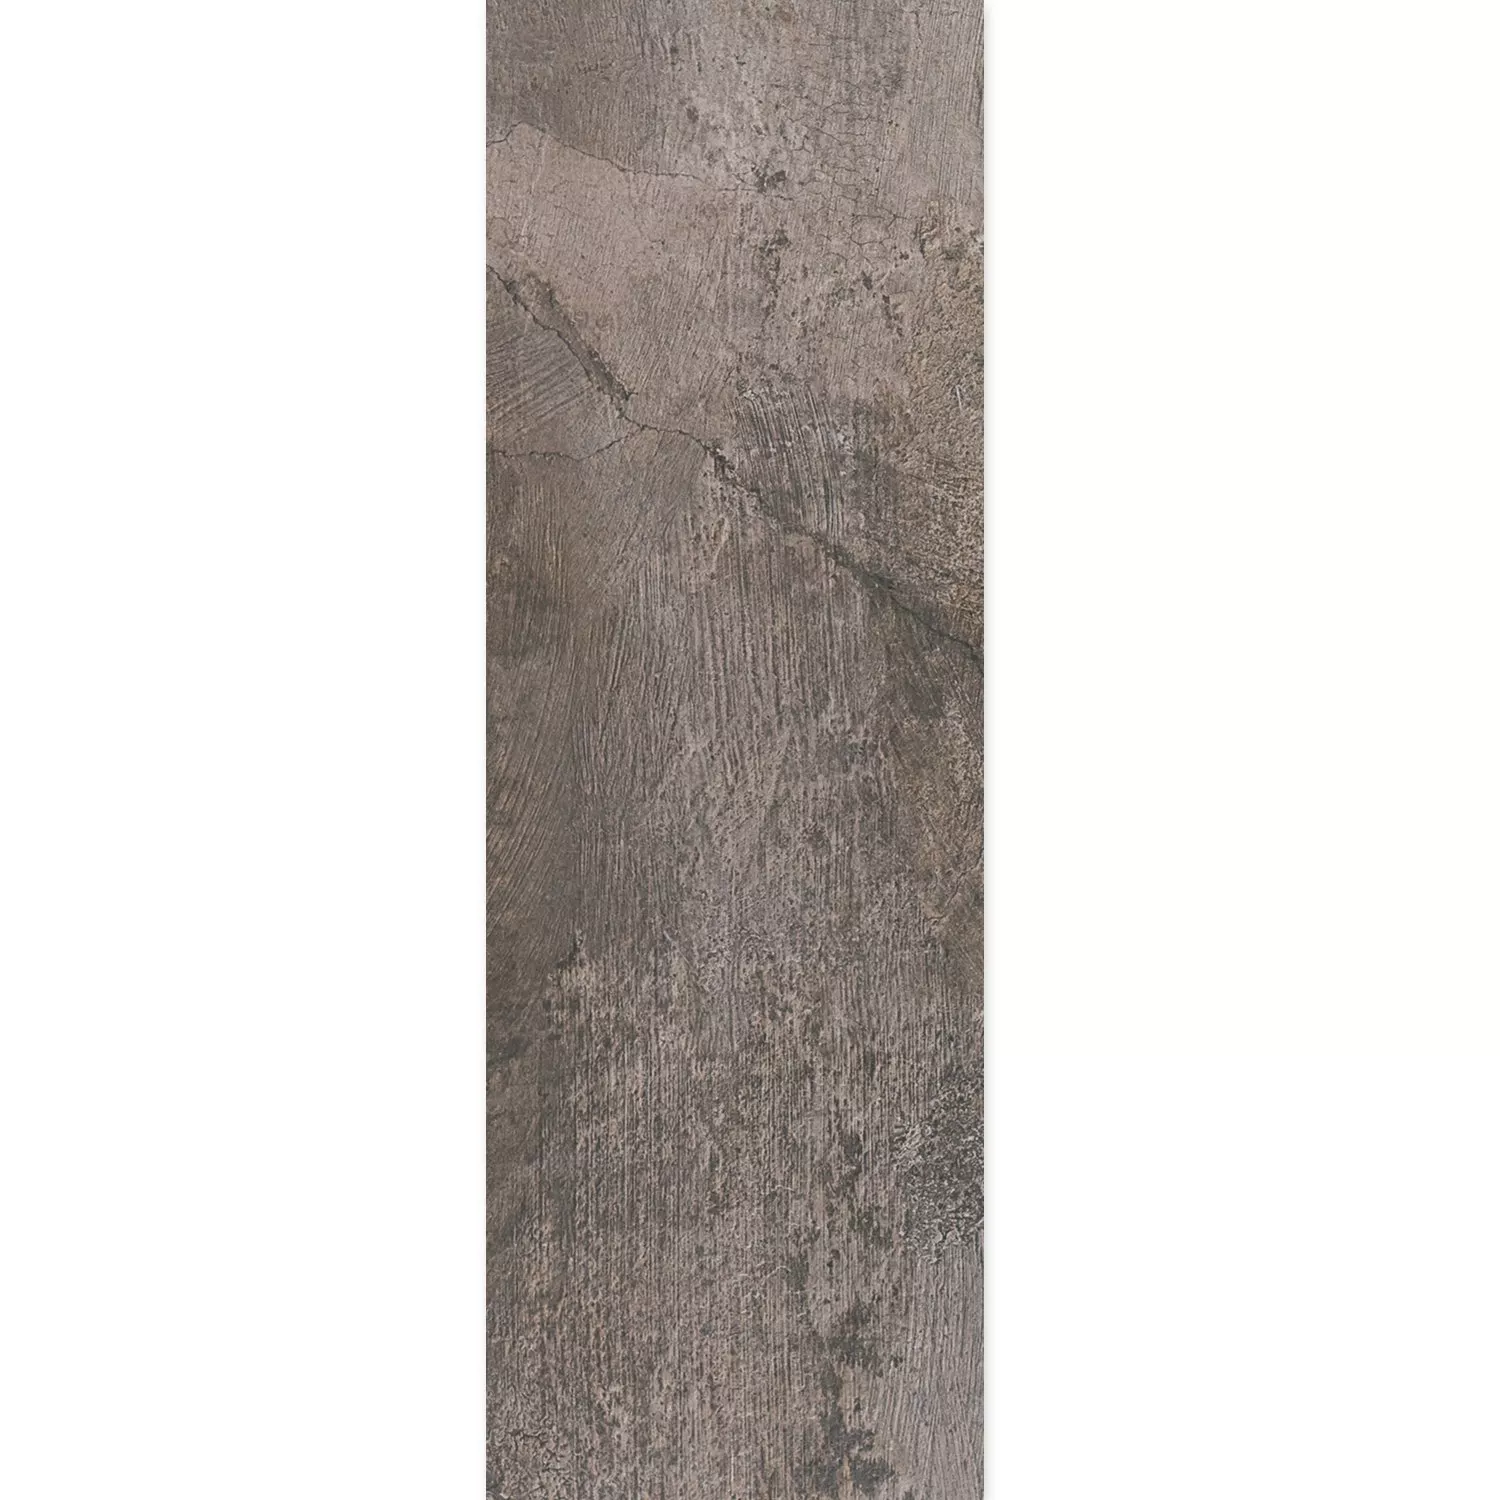 Gresie Aspect De Piatră Polaris R10 Antracit 30x120cm